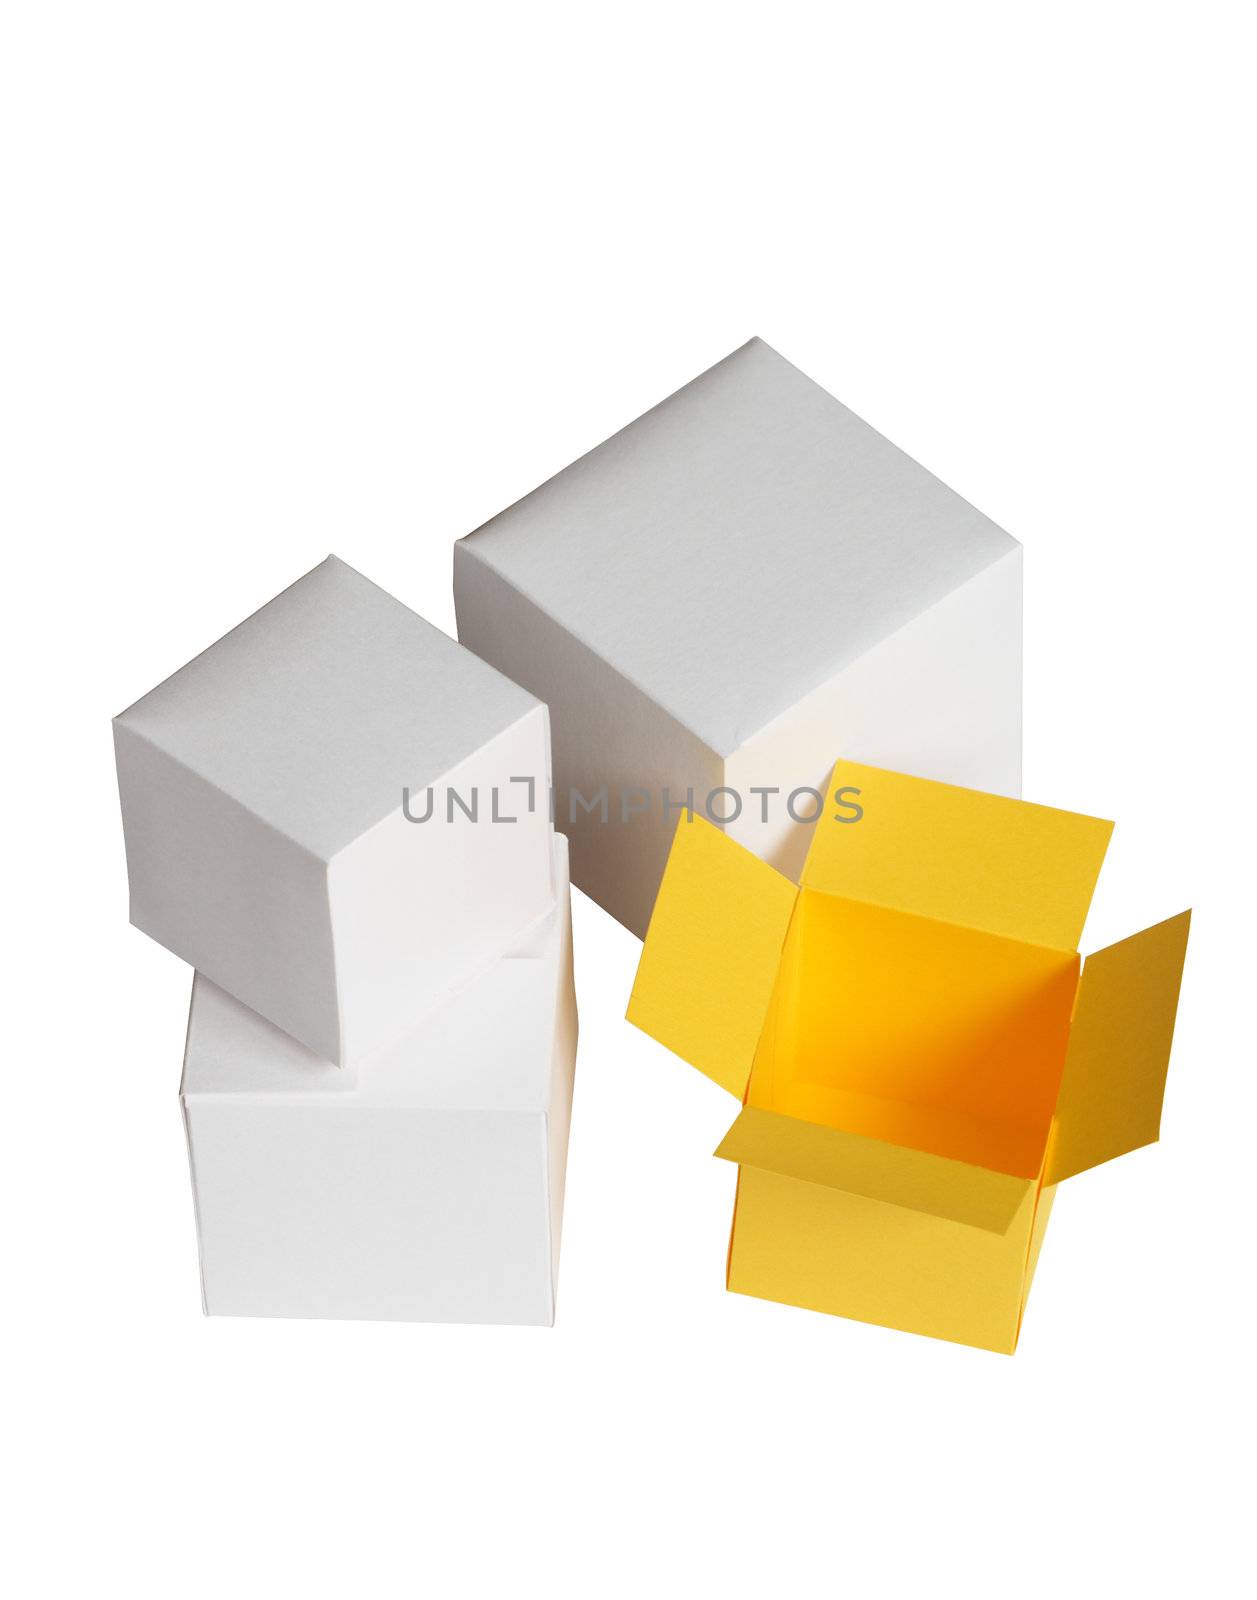 Paper Boxes by kvkirillov